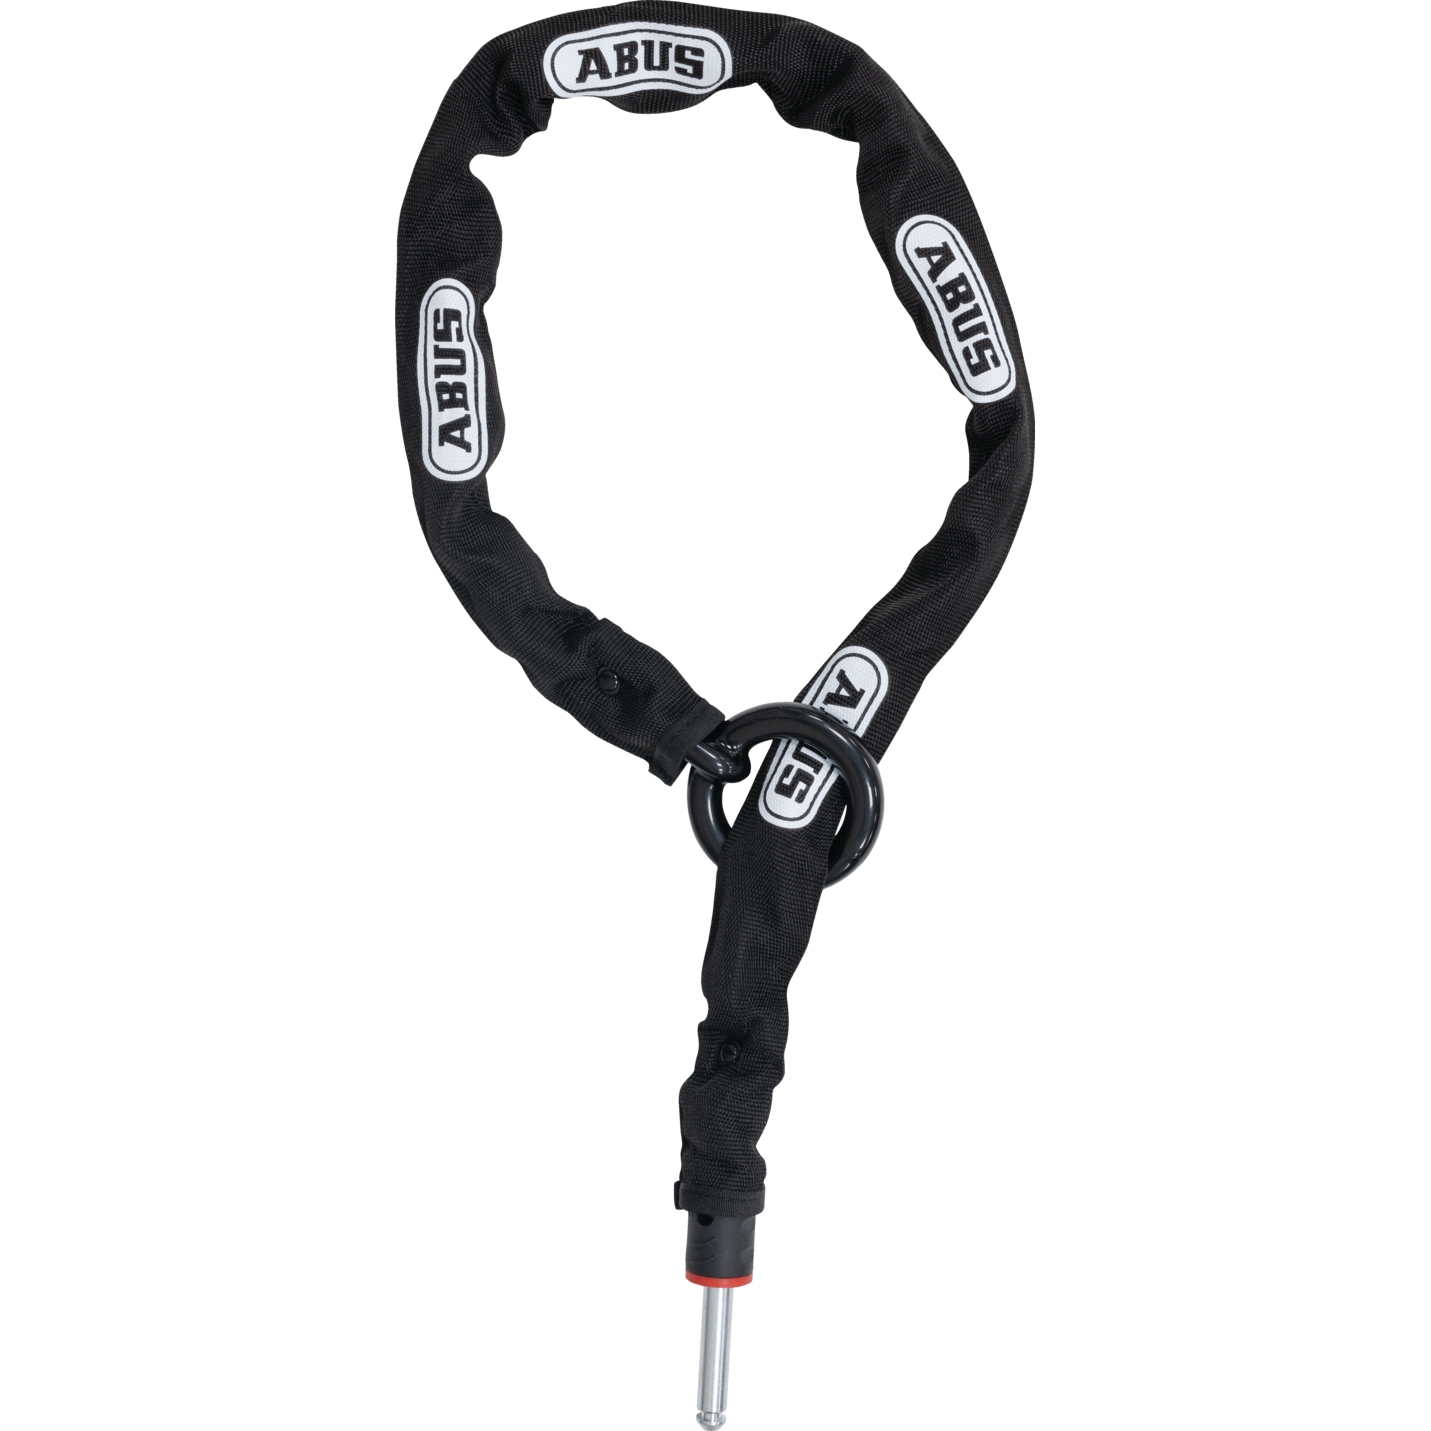 Productfoto van ABUS Adaptor Chain ACH 2.0 6KS Ringslotketting - 100cm zwart